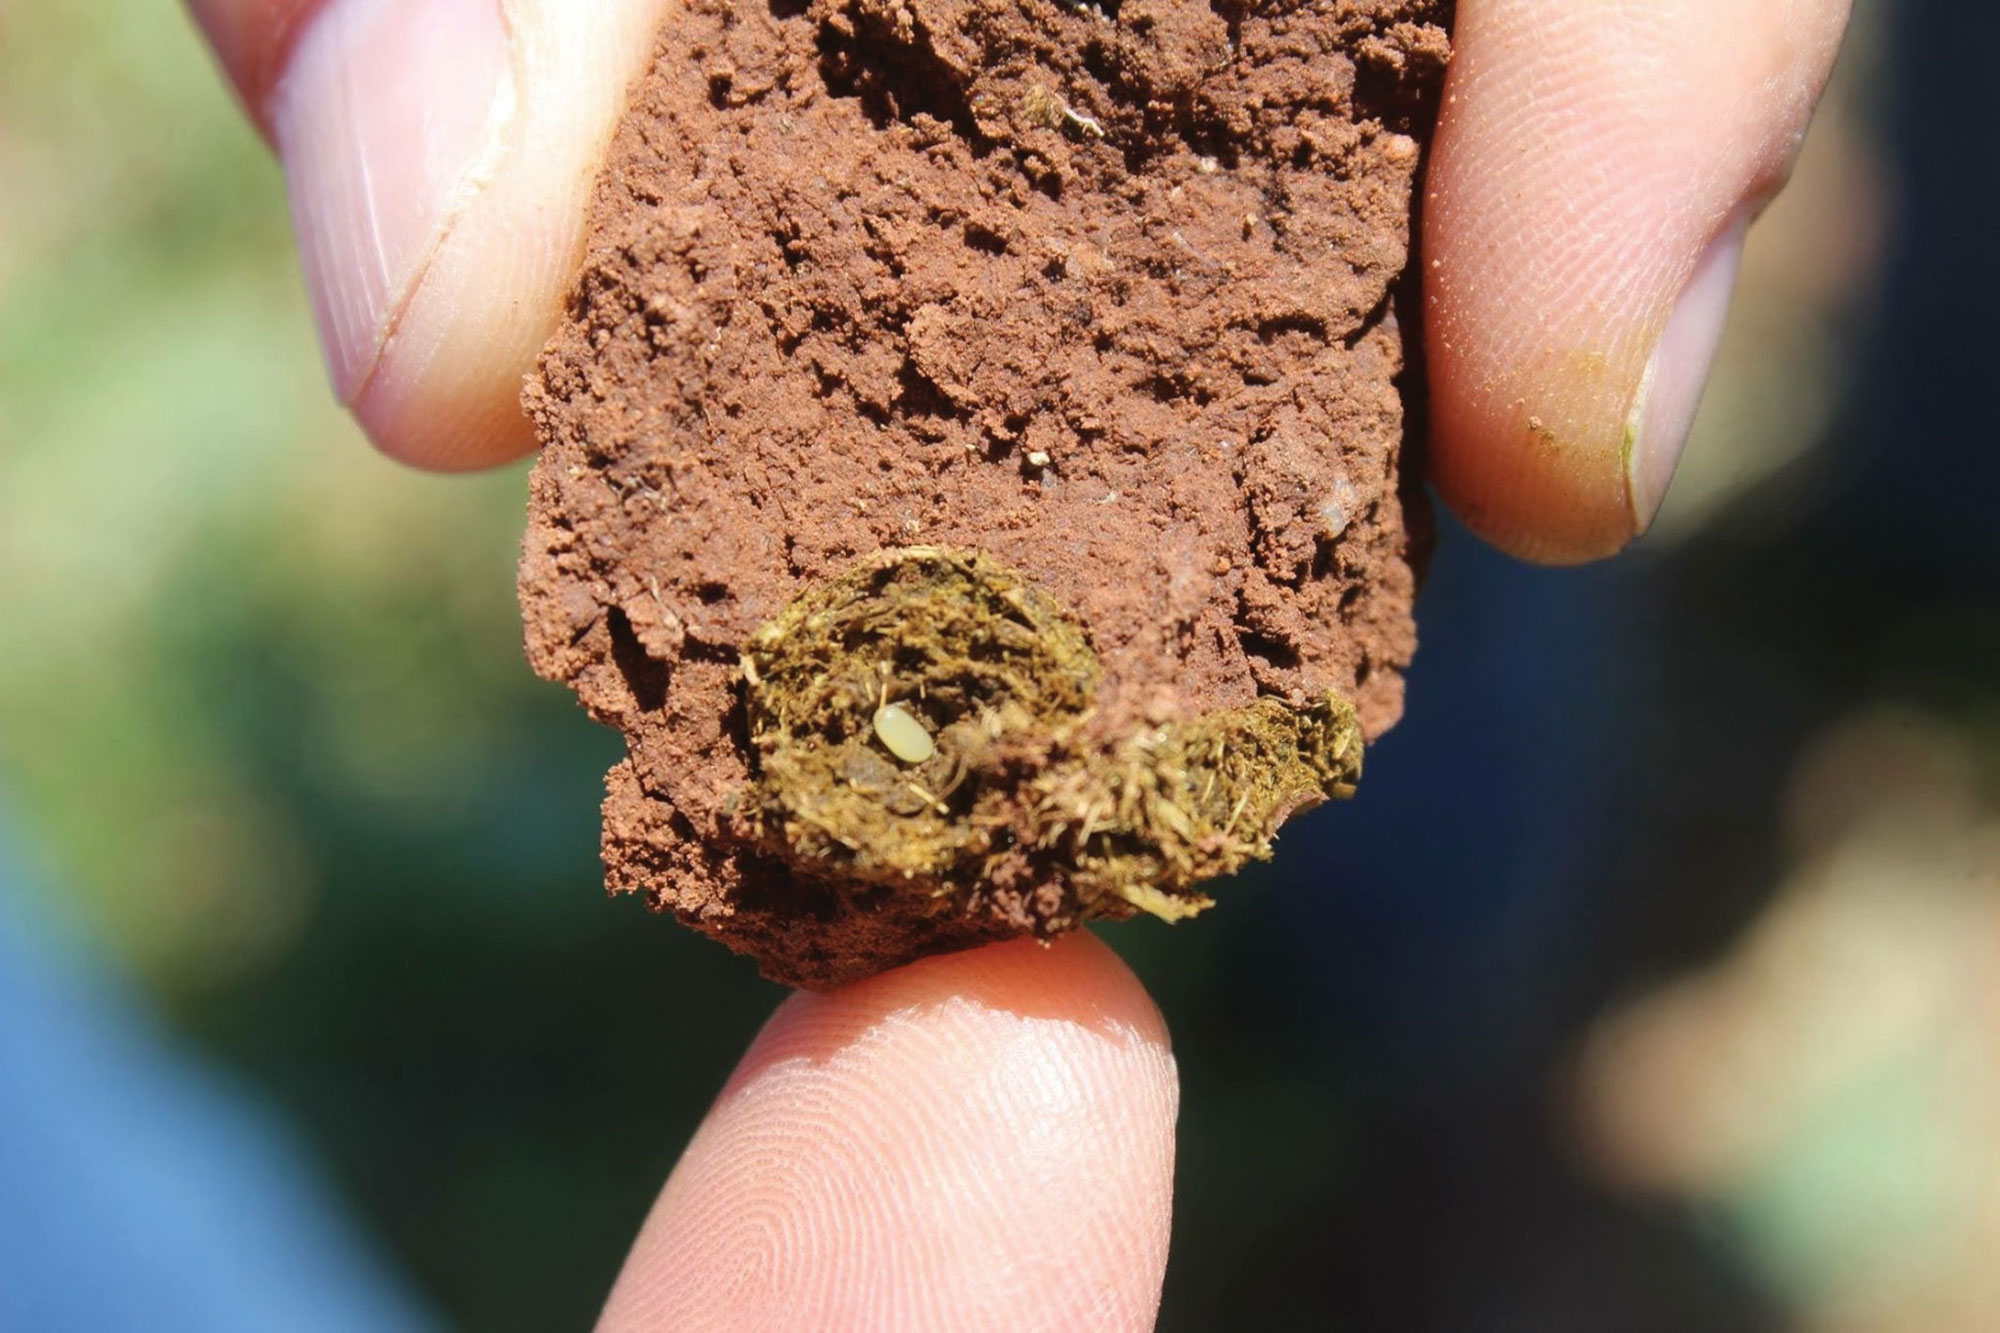 Chunk of soil